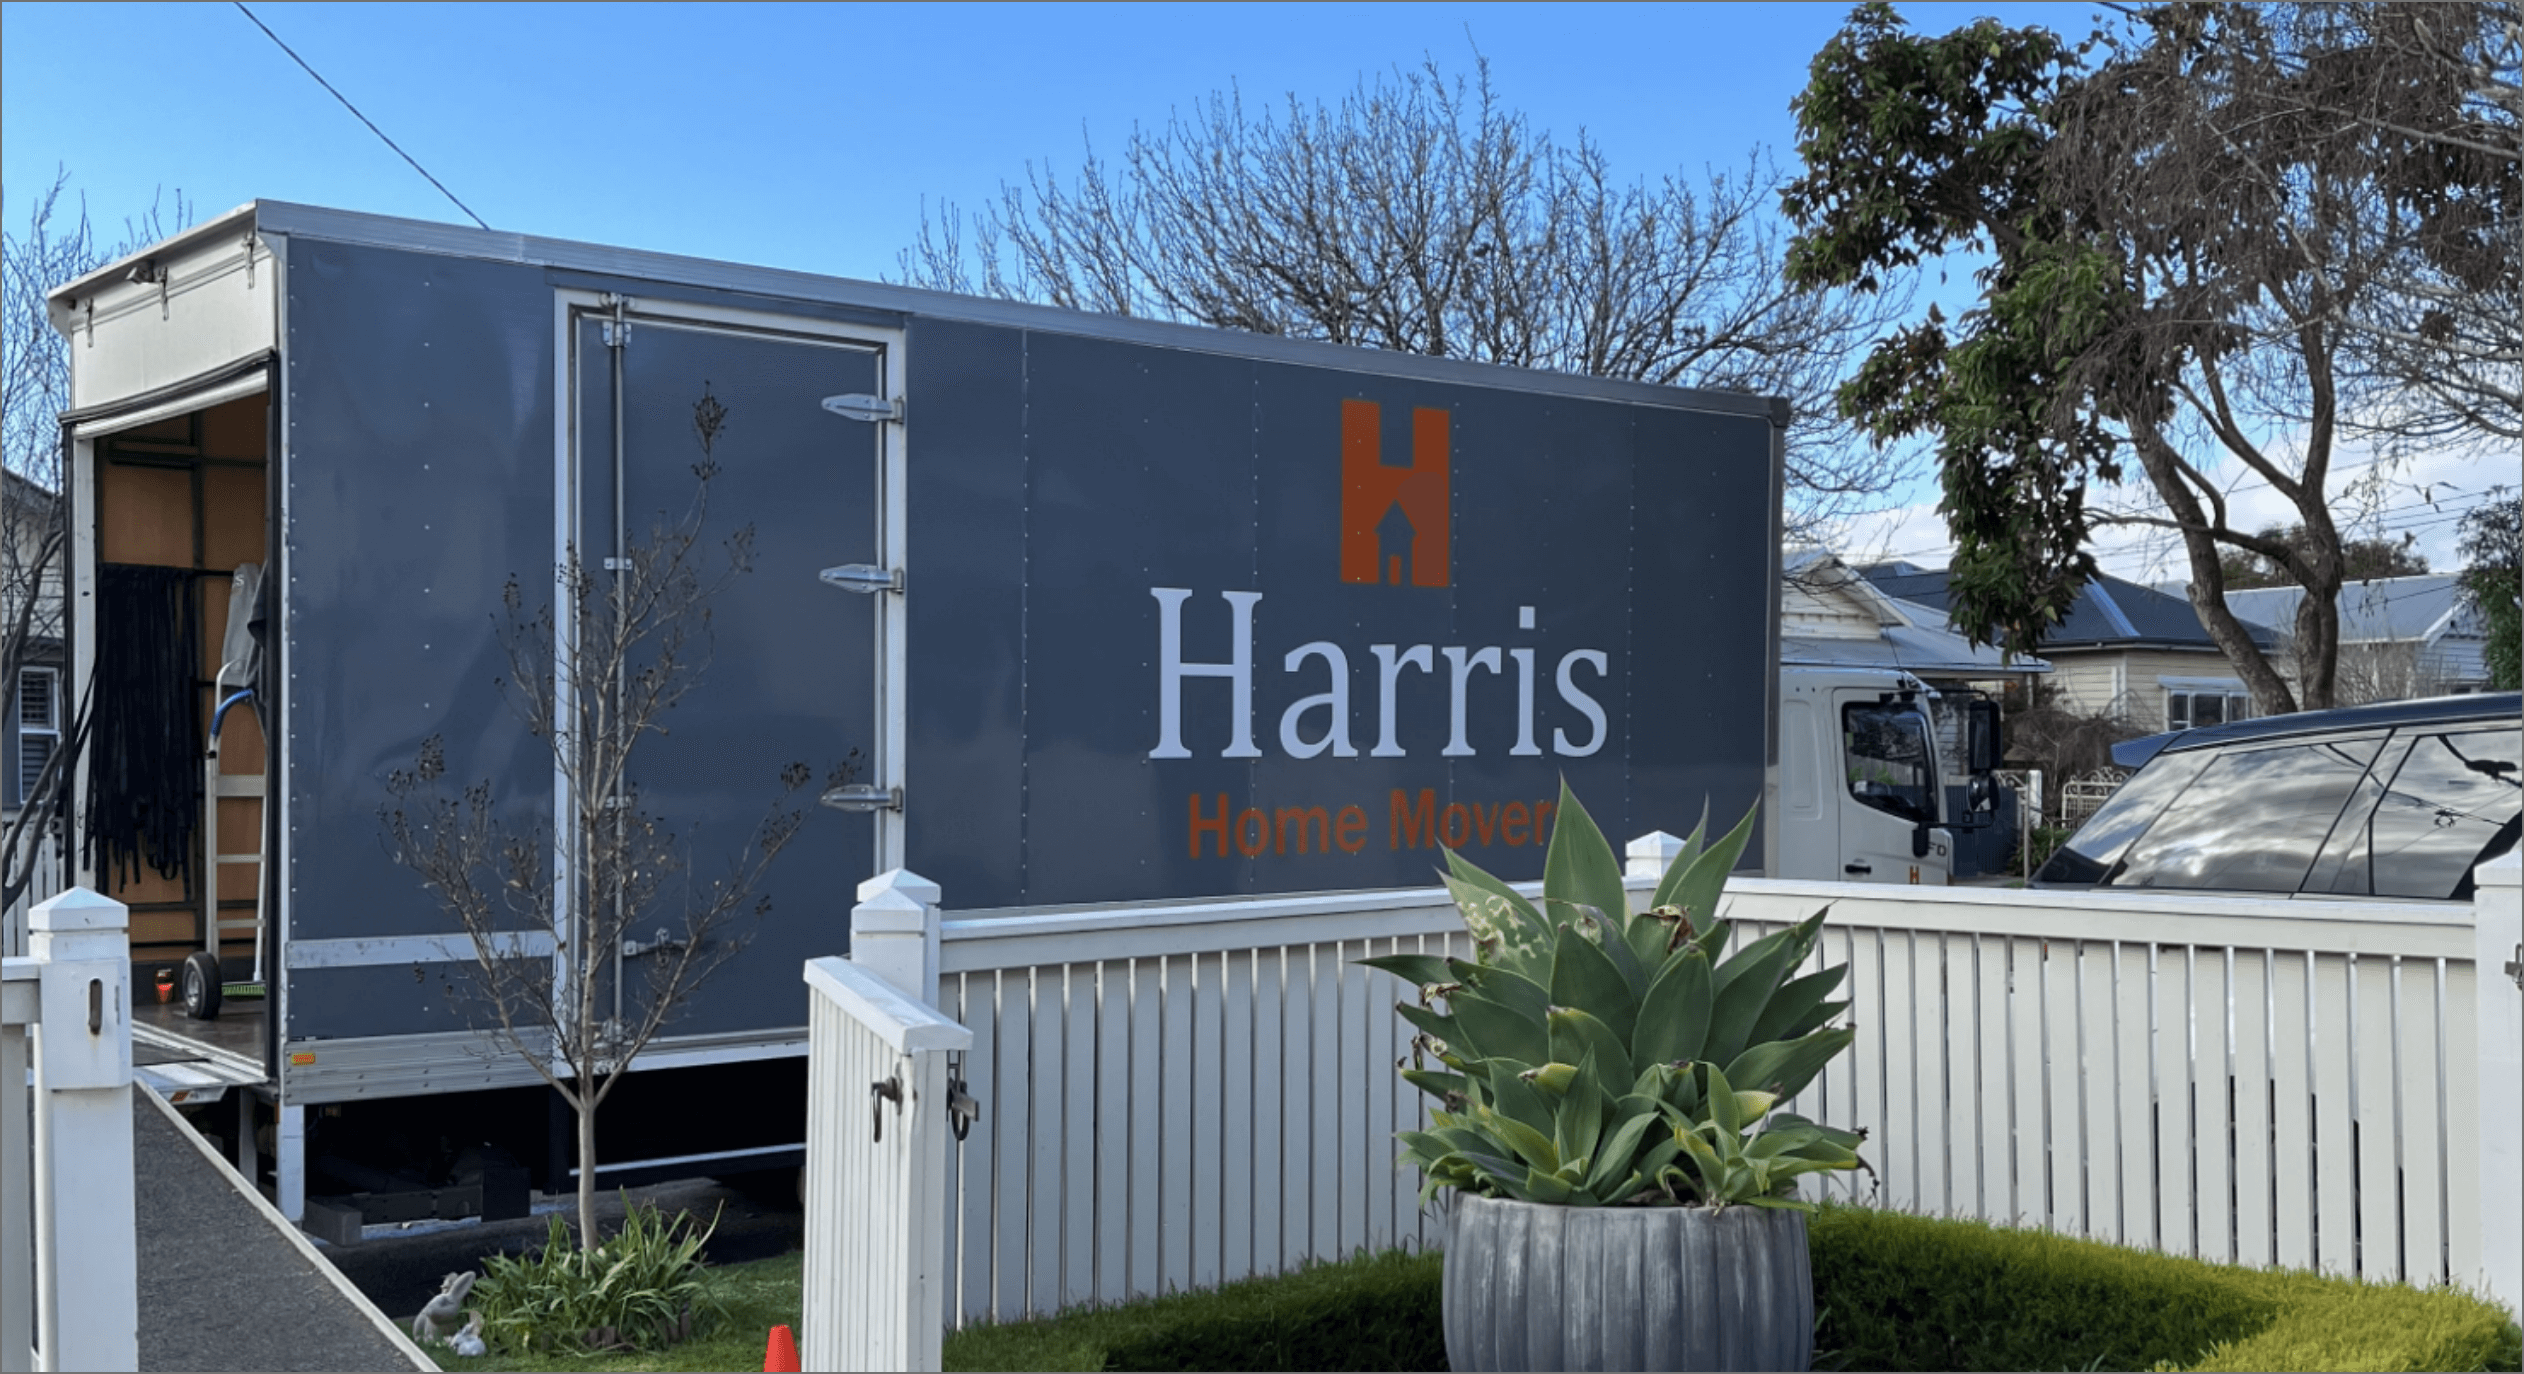 Harris Movers Truck